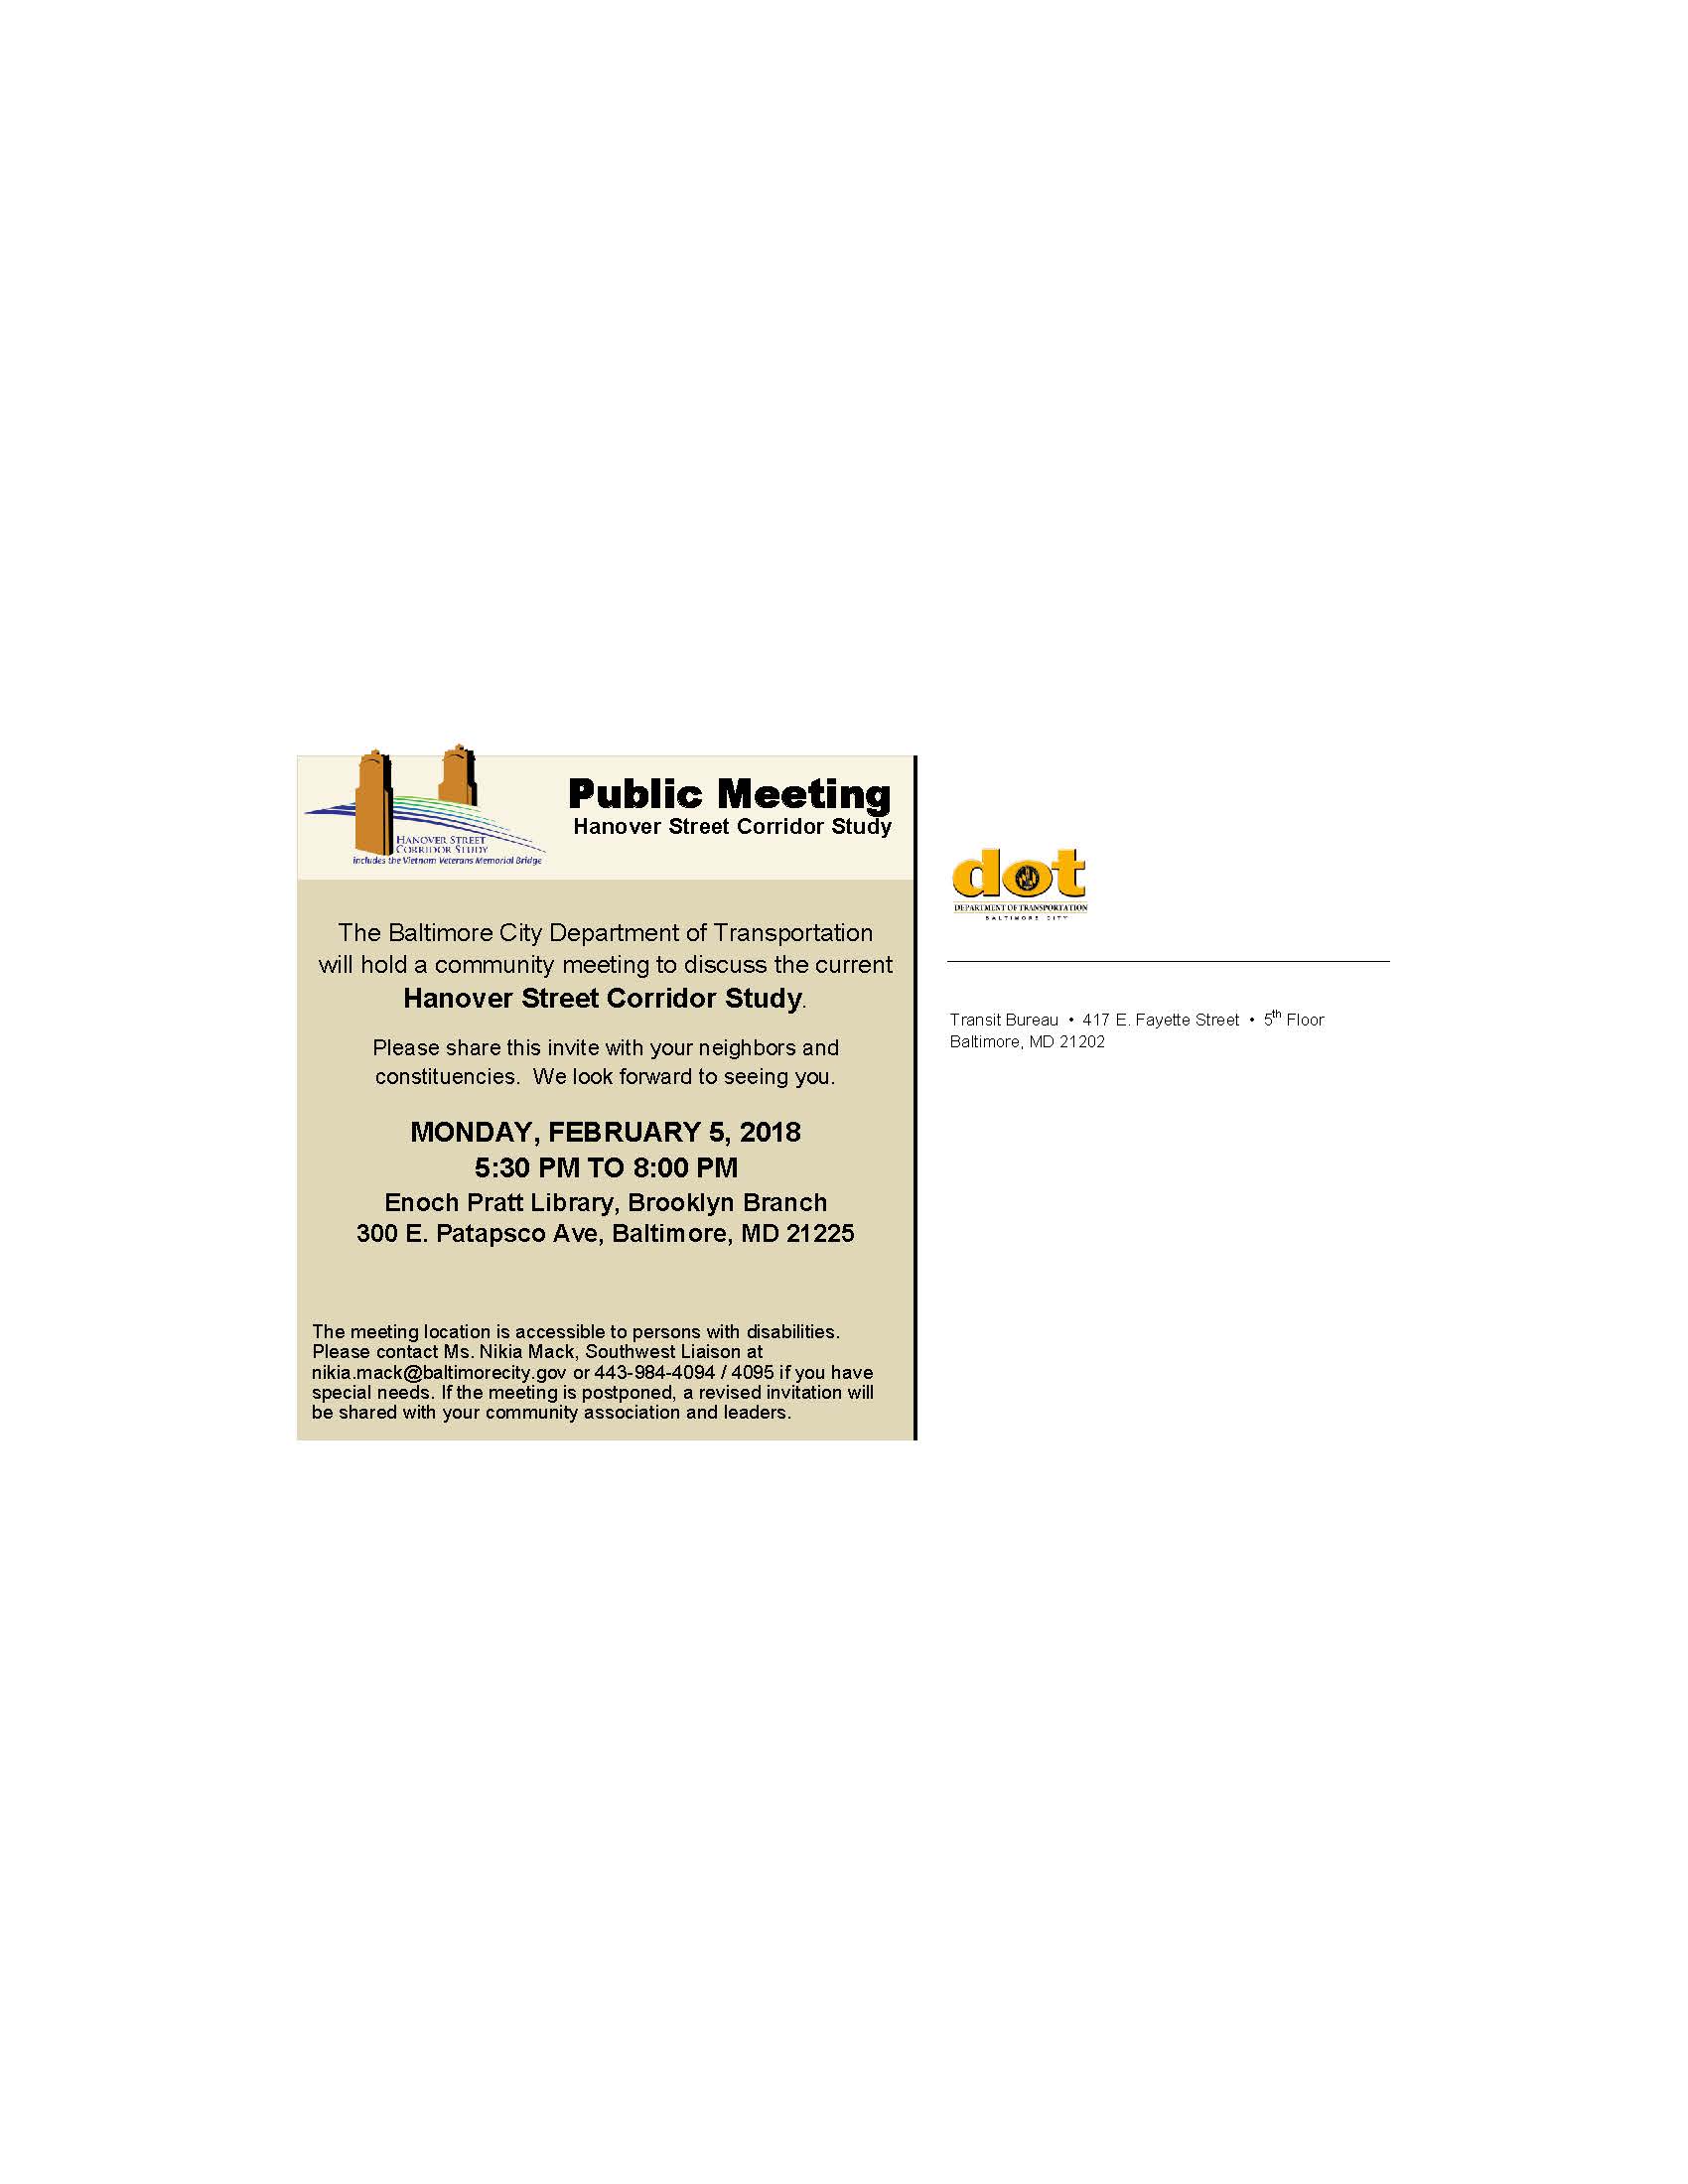 Public Meeting Hanover Street Corridor Study